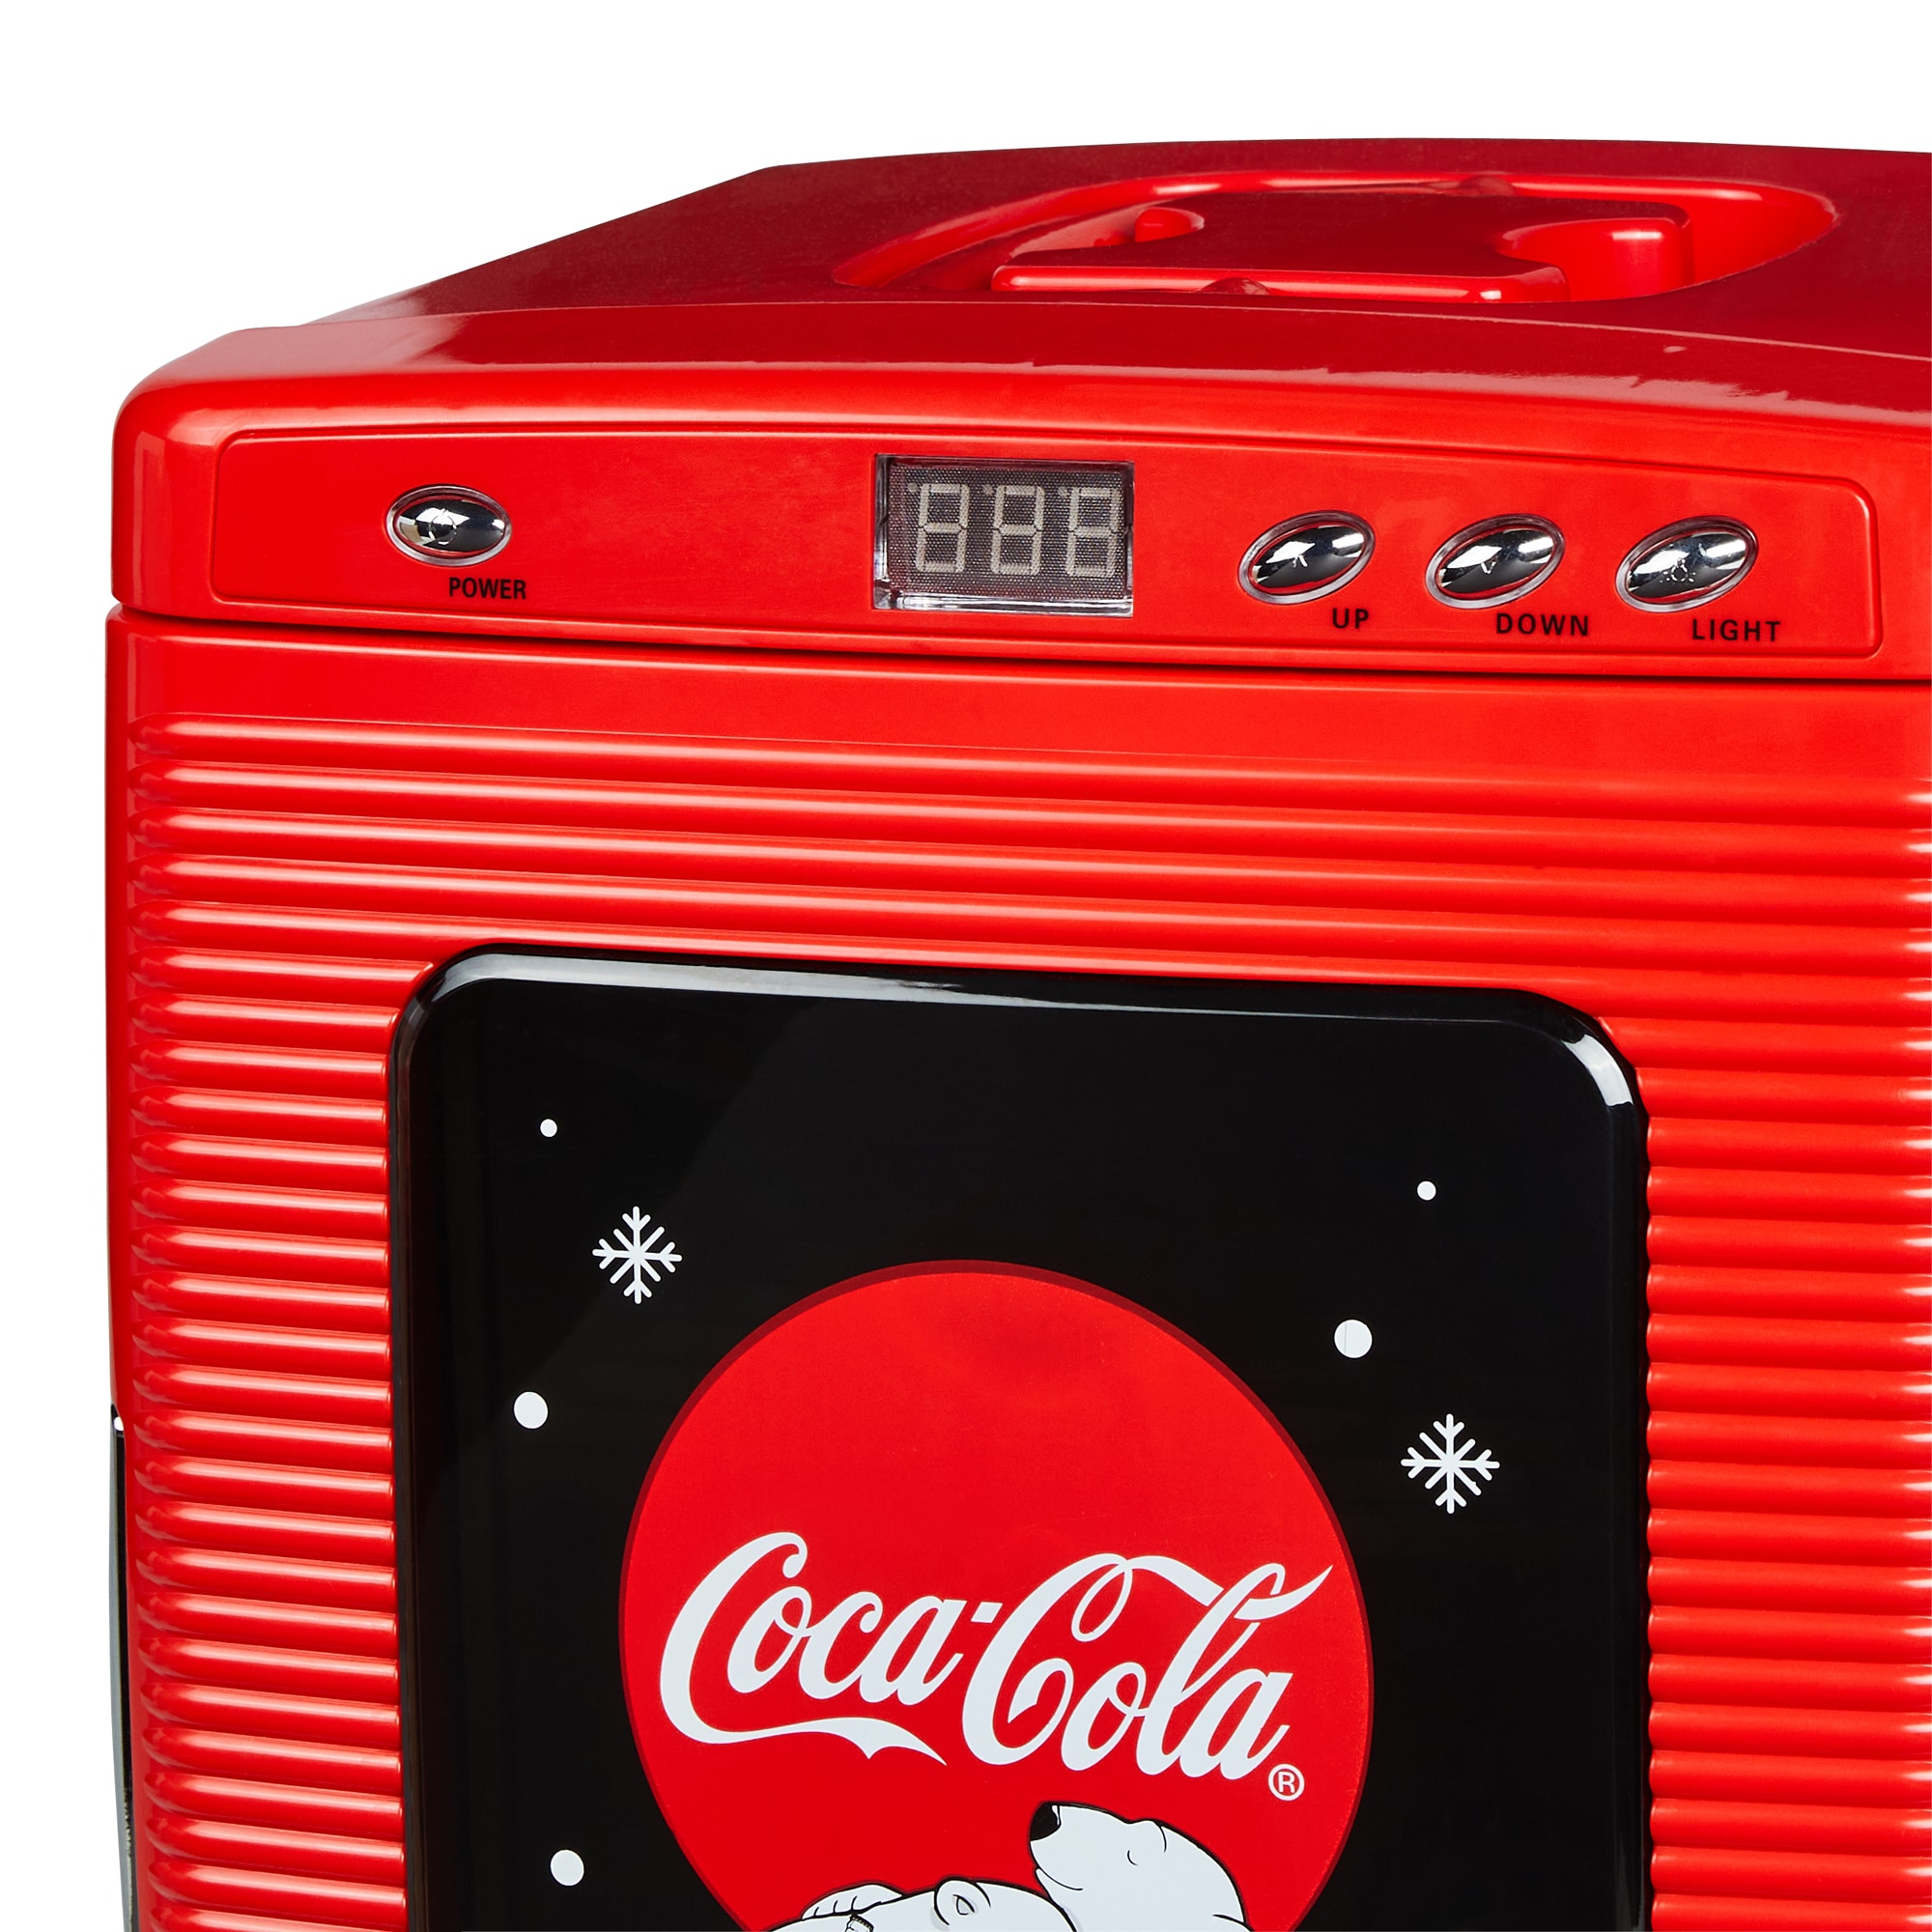 Koolatron 28 Can Coca Cola Beverage Display Mini Fridge Cooler/Warmer